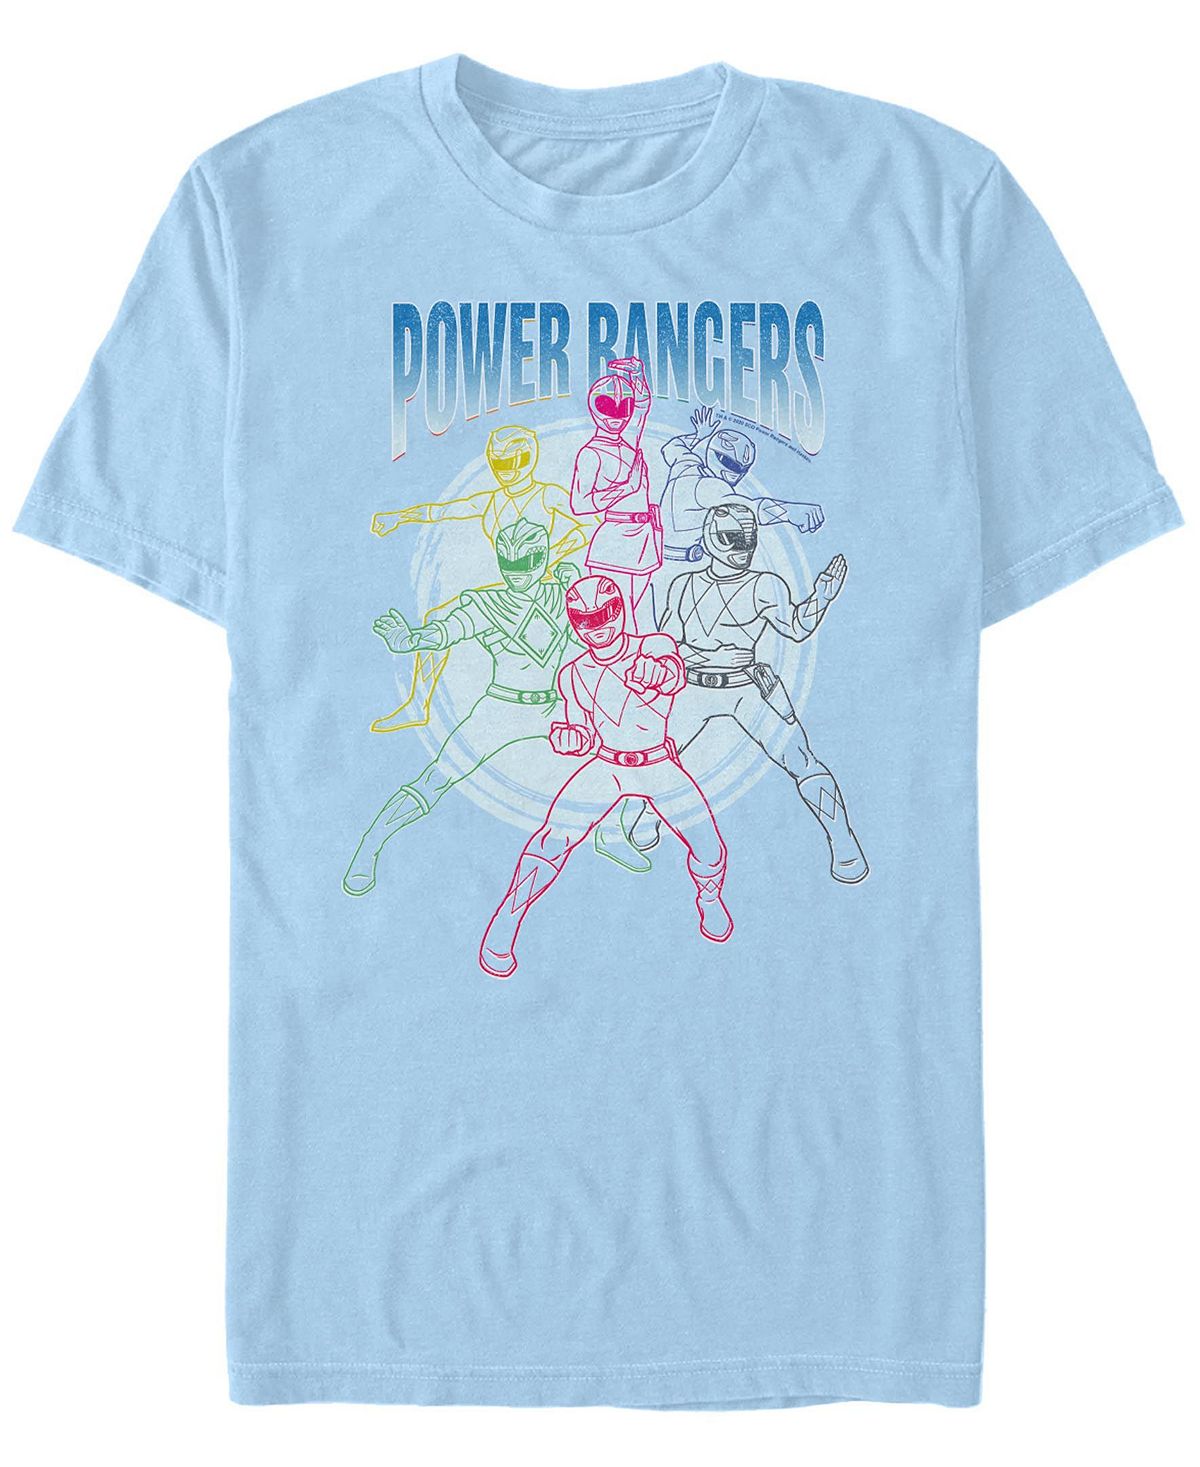 Мужская футболка Power Rangers Line Art с короткими рукавами и круглым вырезом Fifth Sun фигурка reaction figure mighty morphin power rangers wave 2 – scorpina 9 см